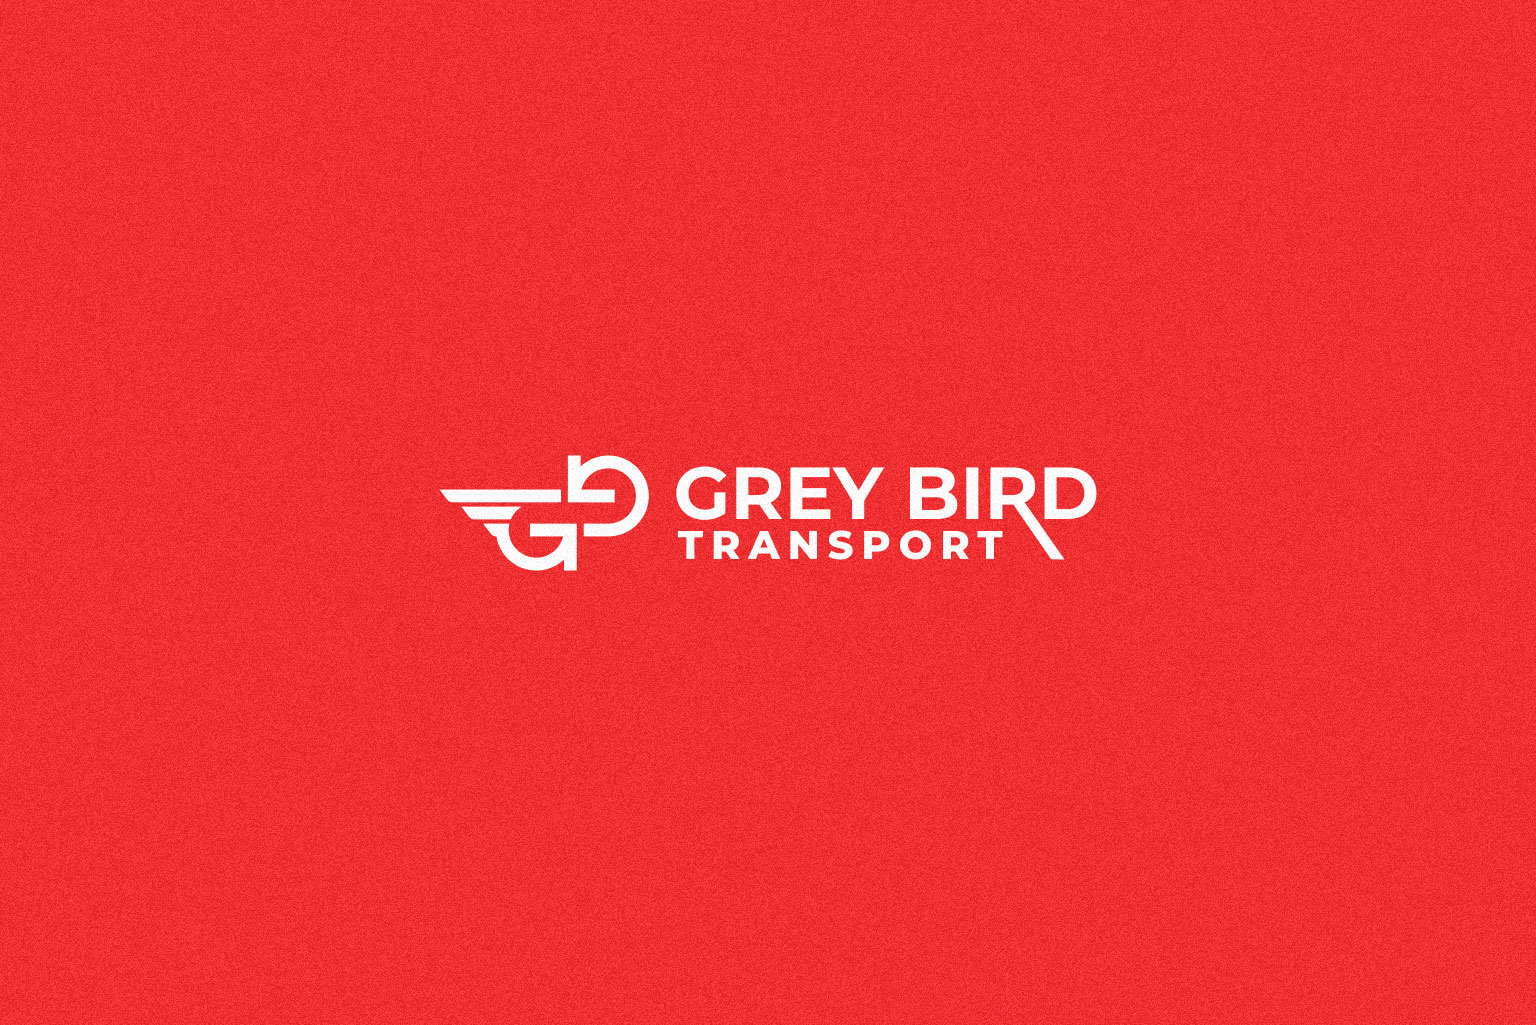 Grey Bird Transport logo. A logo design for a transport and logistics company in Midrand, Johannesburg.